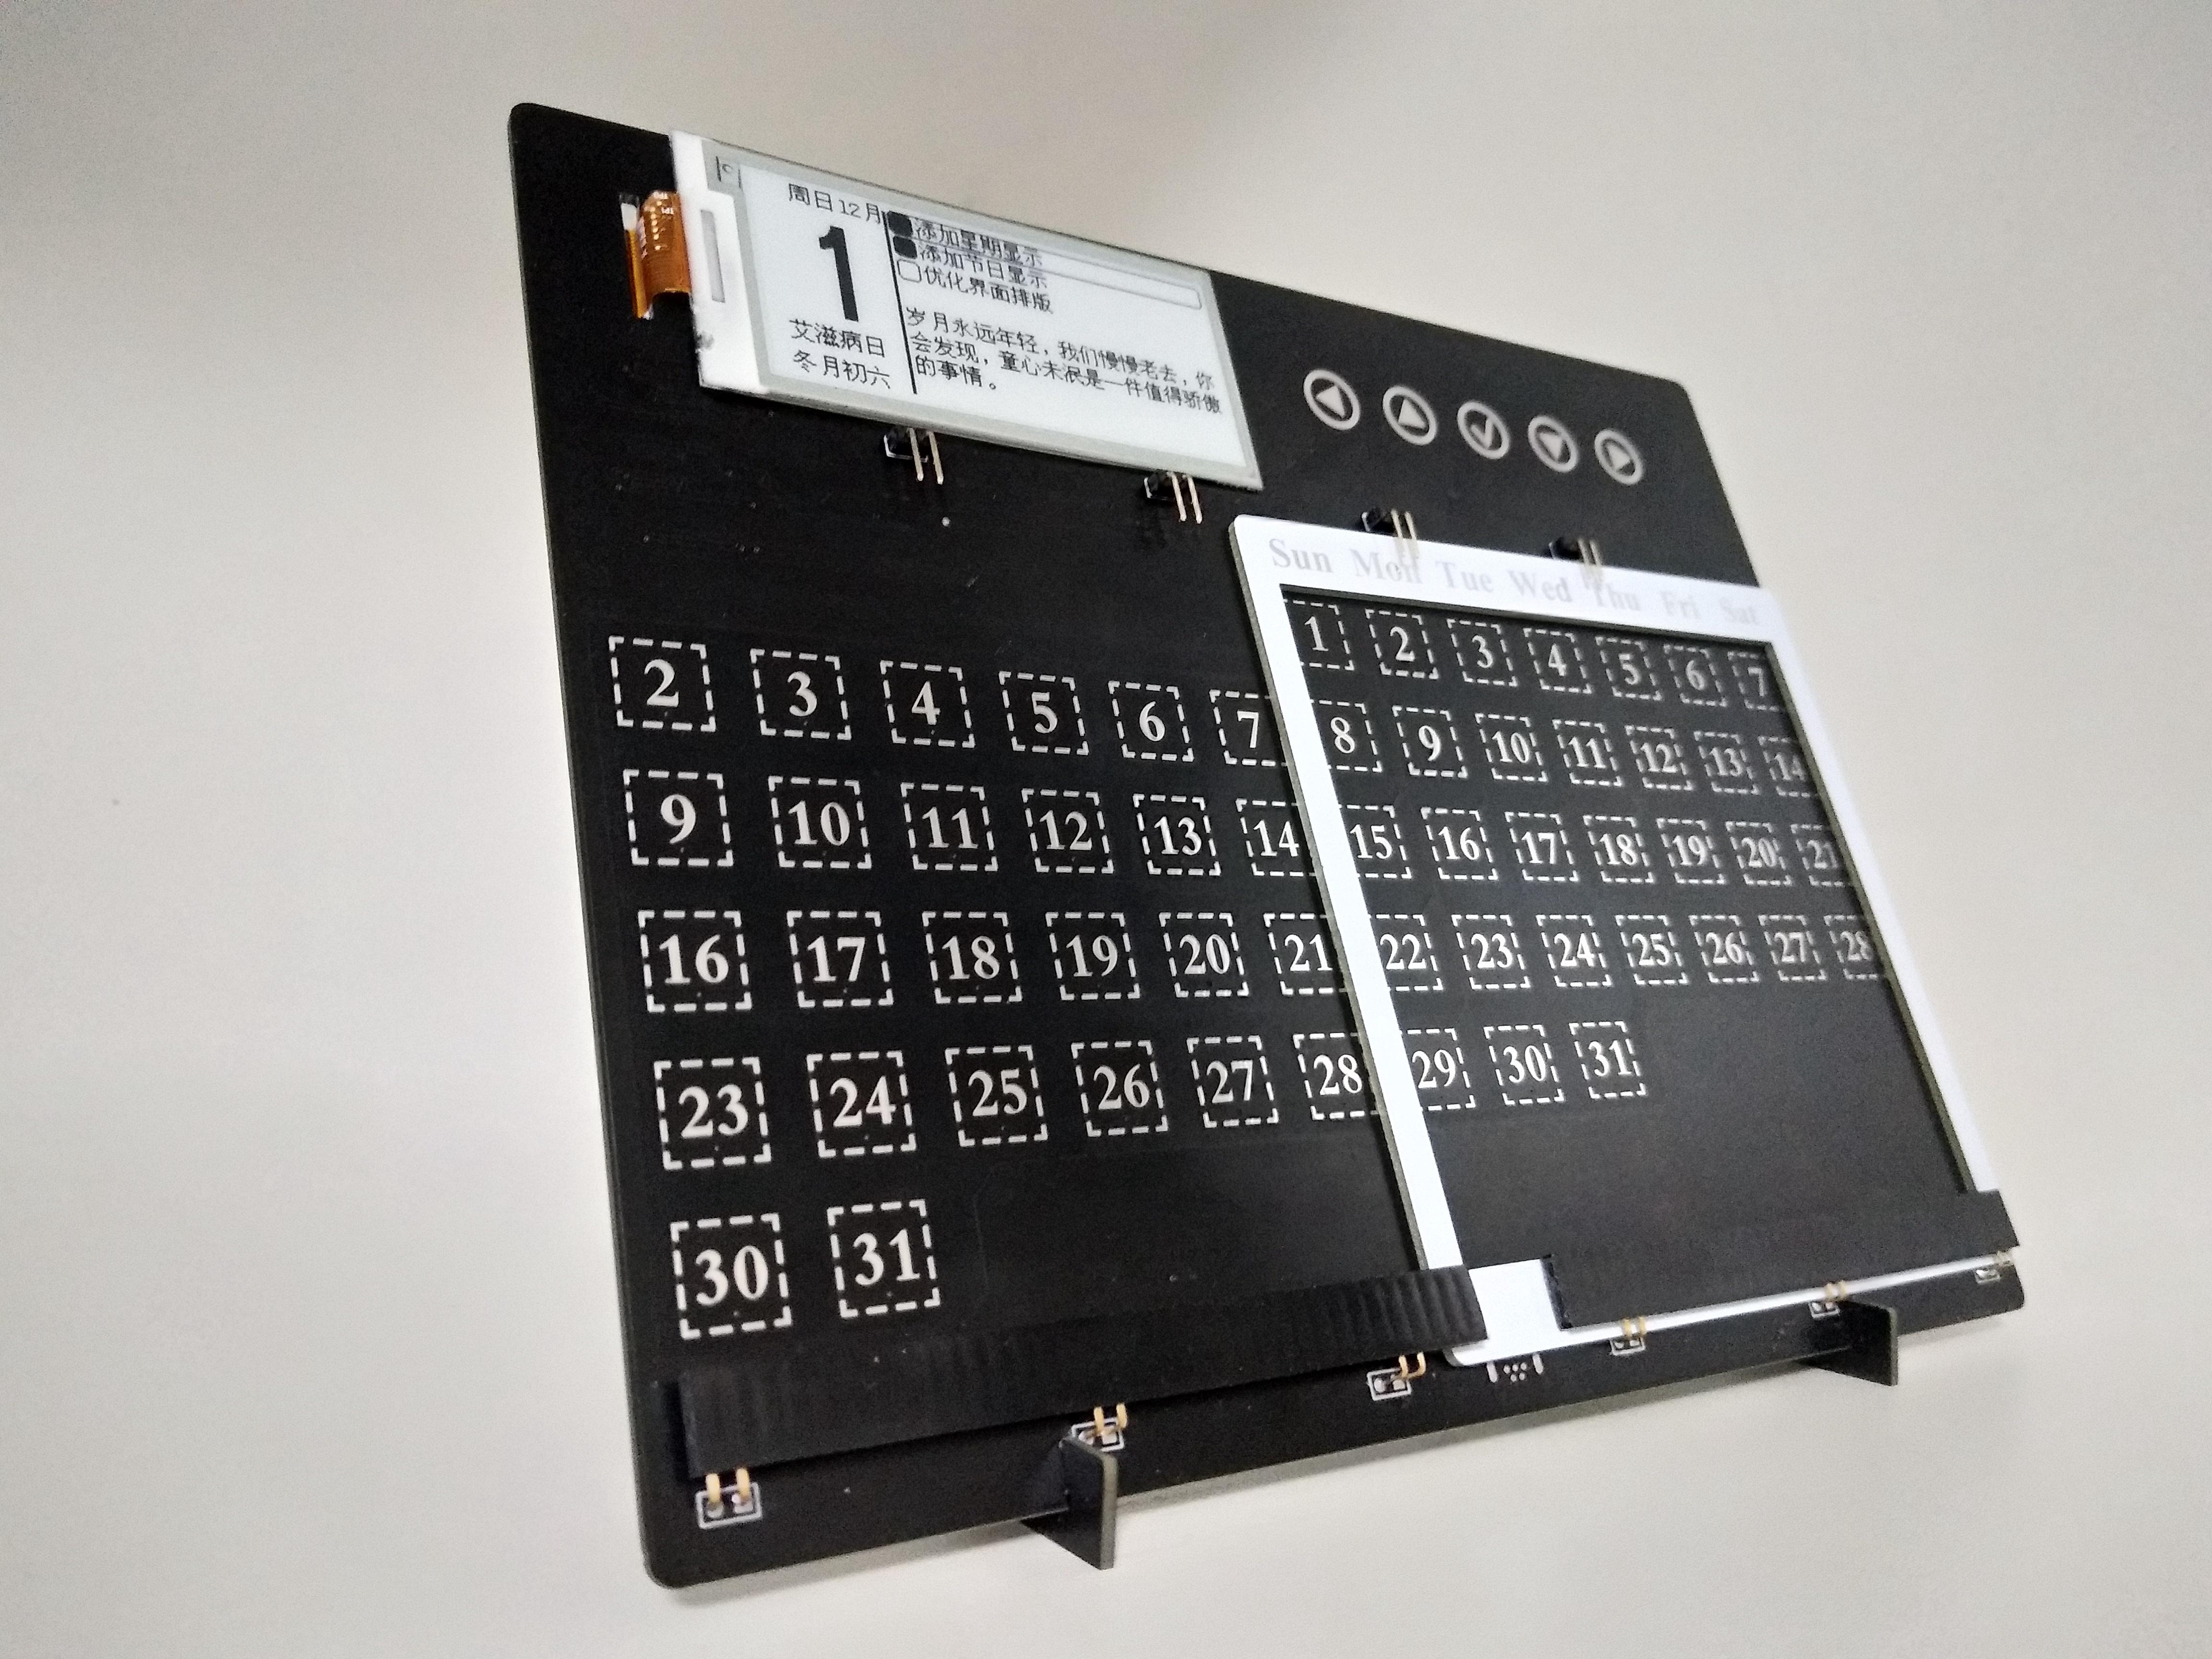 An Electronic Desk Calendar Built On Rt Thread Iot Os